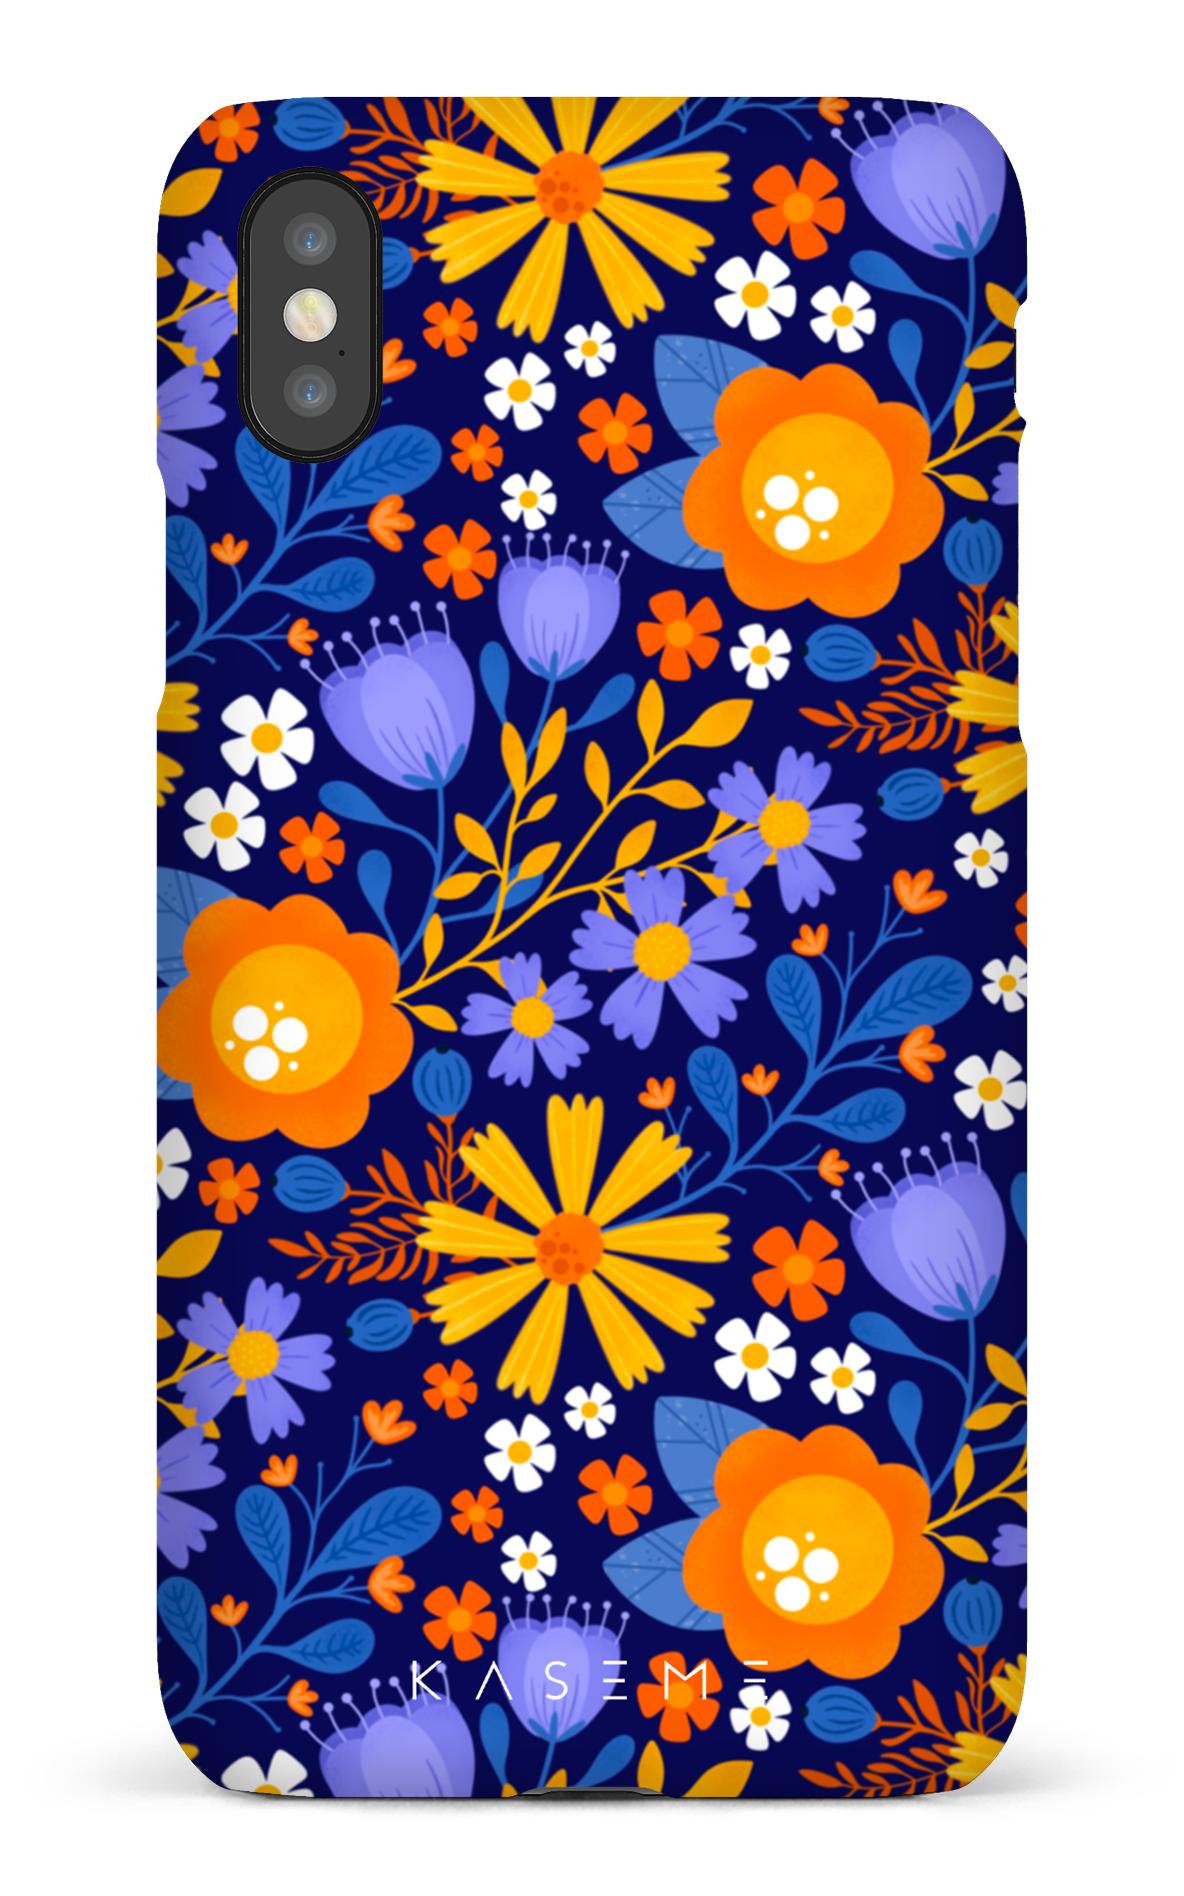 Autumn Bloom Blue by Createdbyginny - iPhone X/Xs